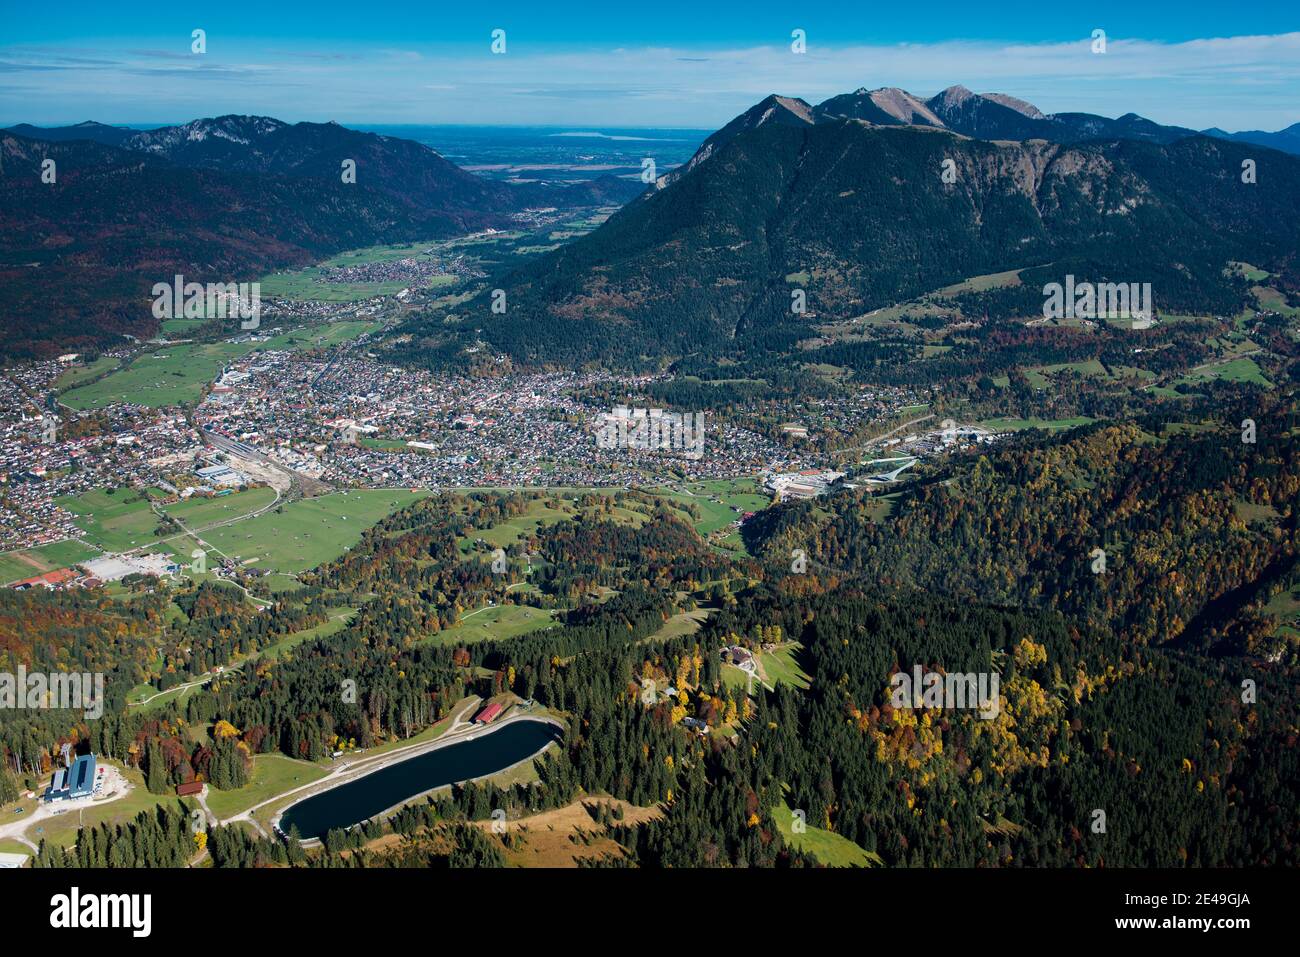 Local mountain, snowmaking lake, Garmisch Classic area, Loisachtal, Wank, Partenkirchen, autumn, Garmisch-Partenkirchen, aerial view, Werdenfelser Land, Oberland, Bavaria, Germany Stock Photo